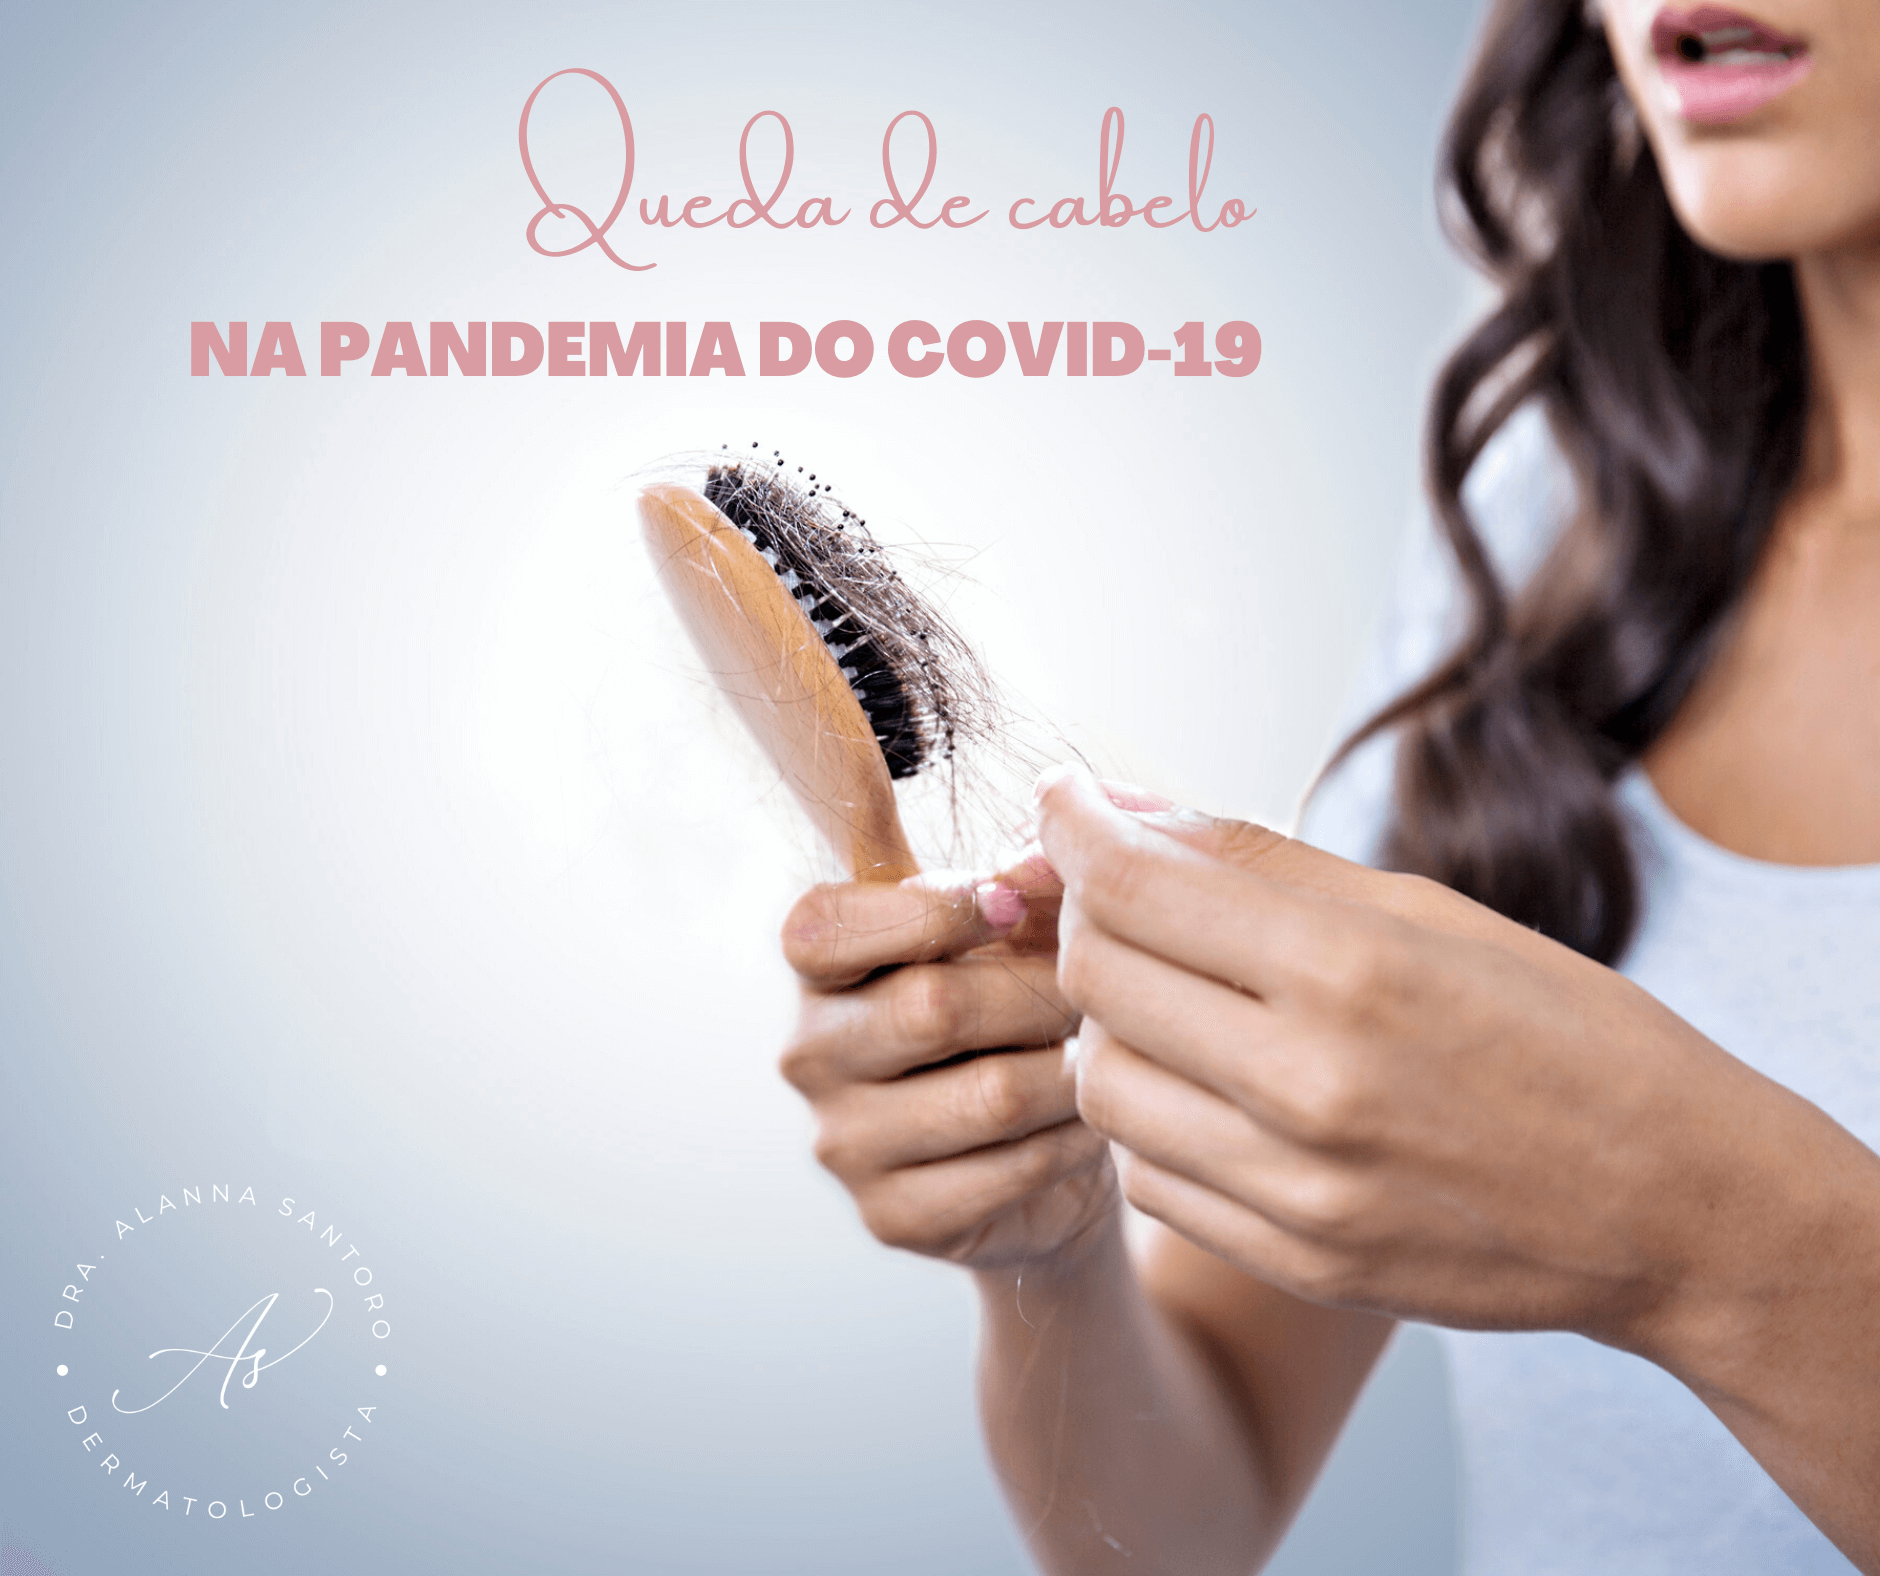 QUEDA DE CABELO E A PANDEMIA DO COVID-19